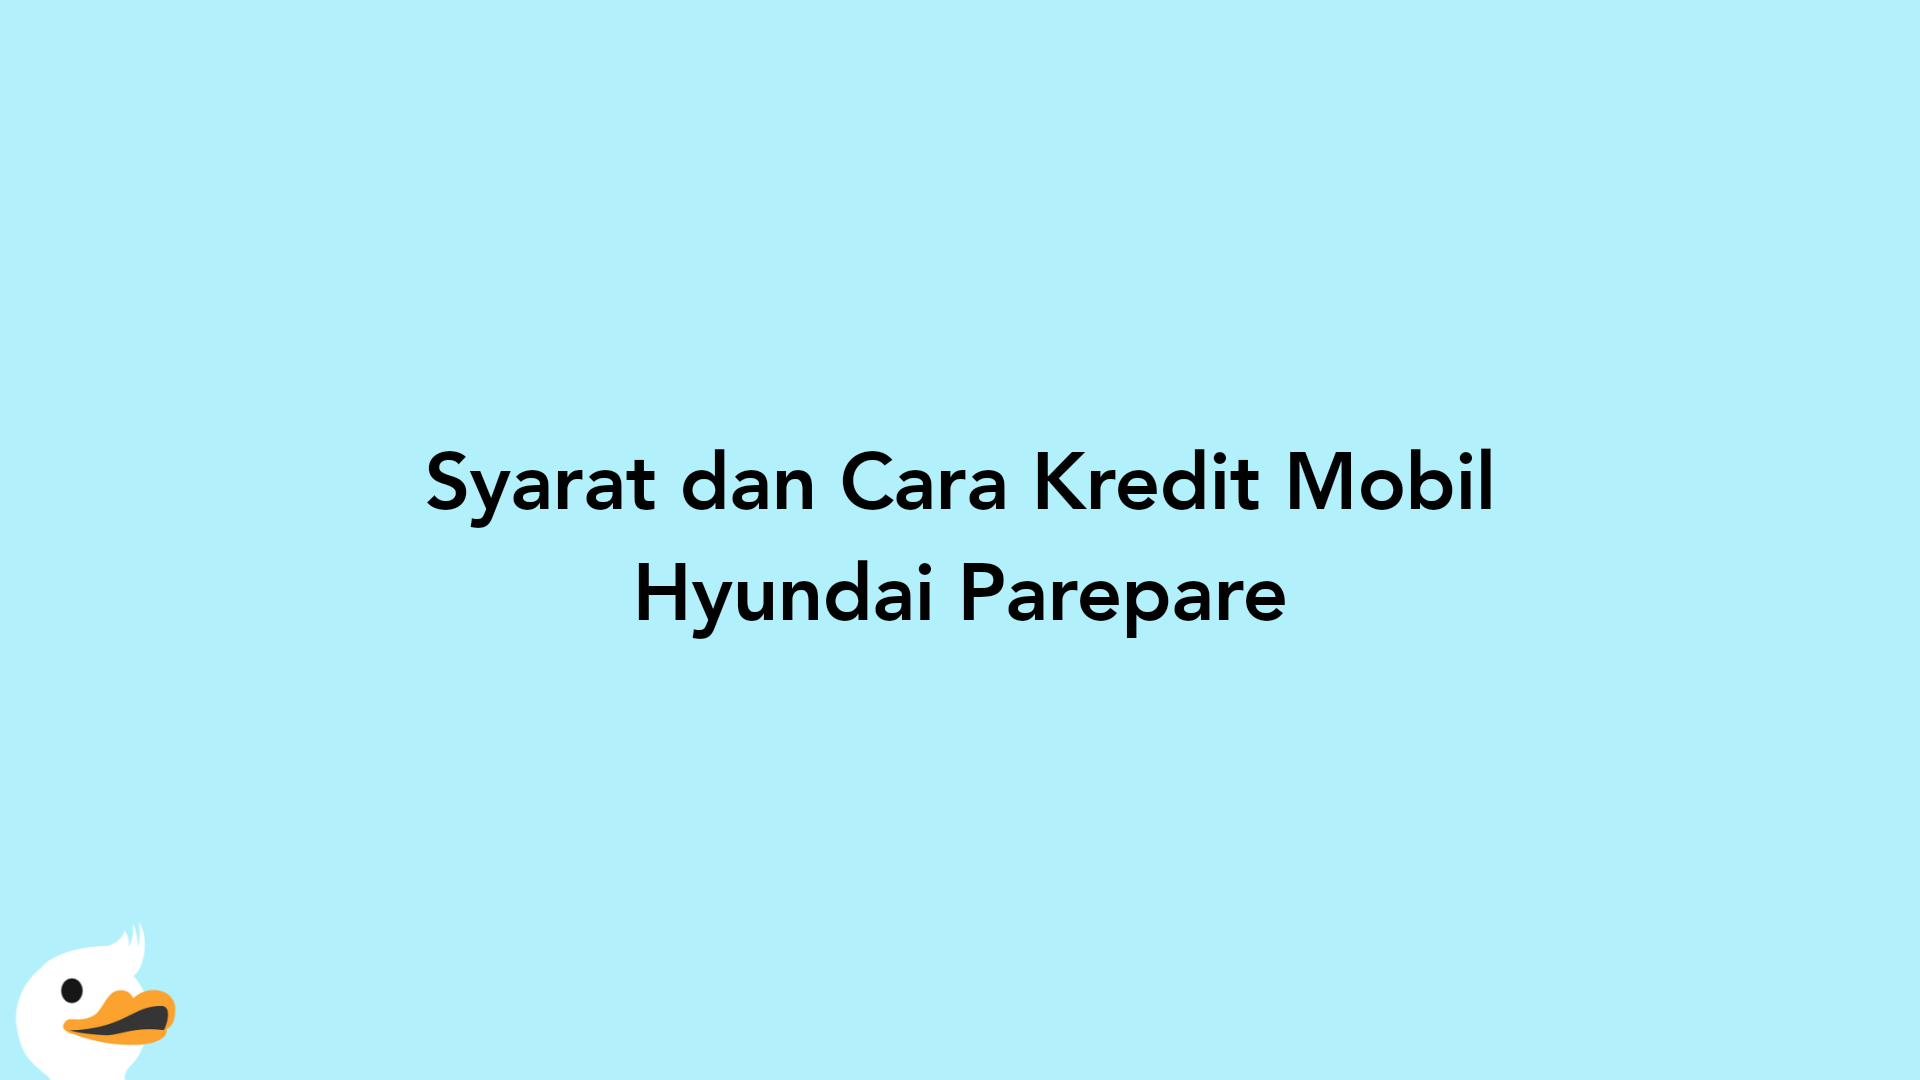 Syarat dan Cara Kredit Mobil Hyundai Parepare